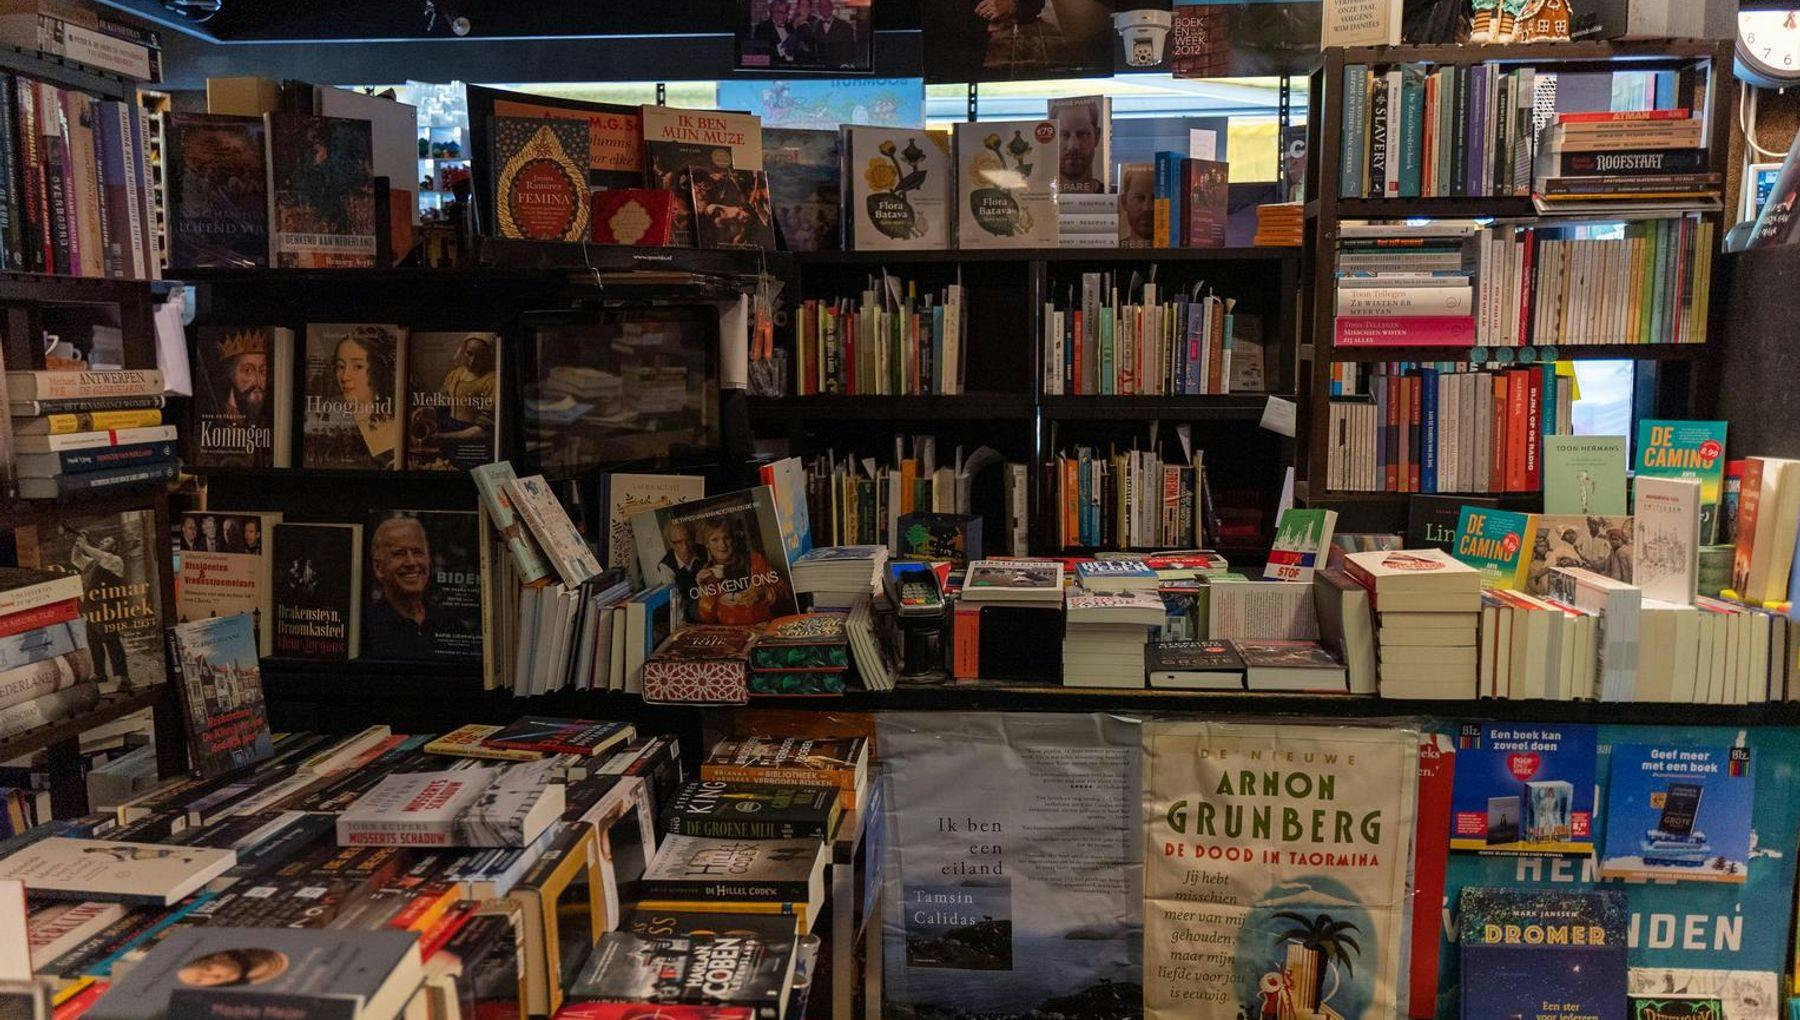 Boekhandel Jimmink, book store Rivierenbuurt, interior books